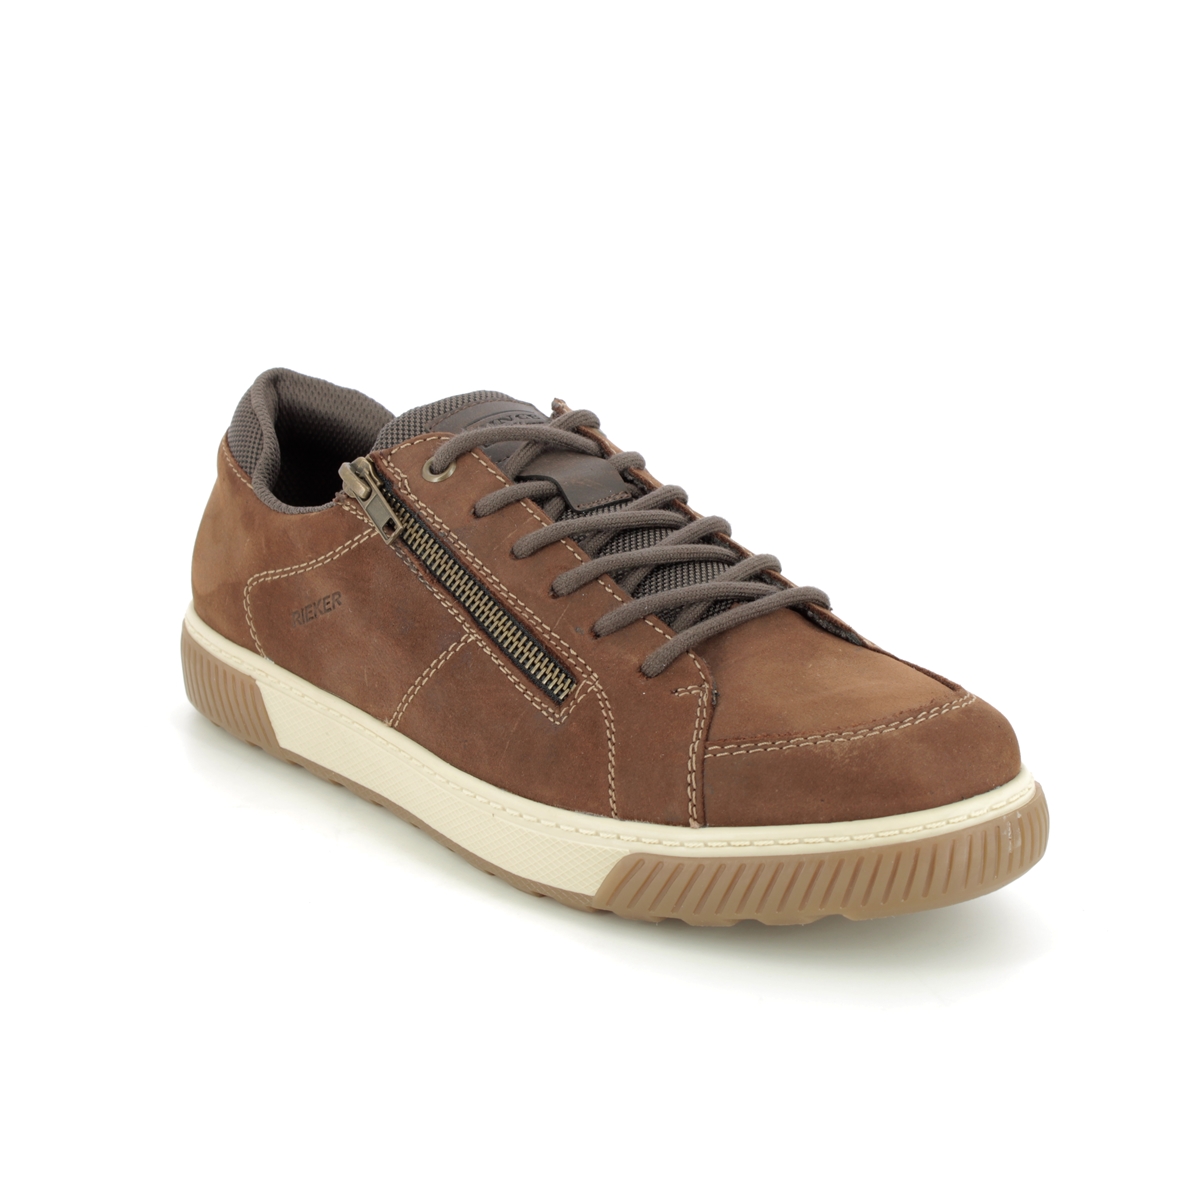 Rieker Urbanzi Tan Suede Mens Comfort Shoes 18910-22 In Size 42 In Plain Tan Suede